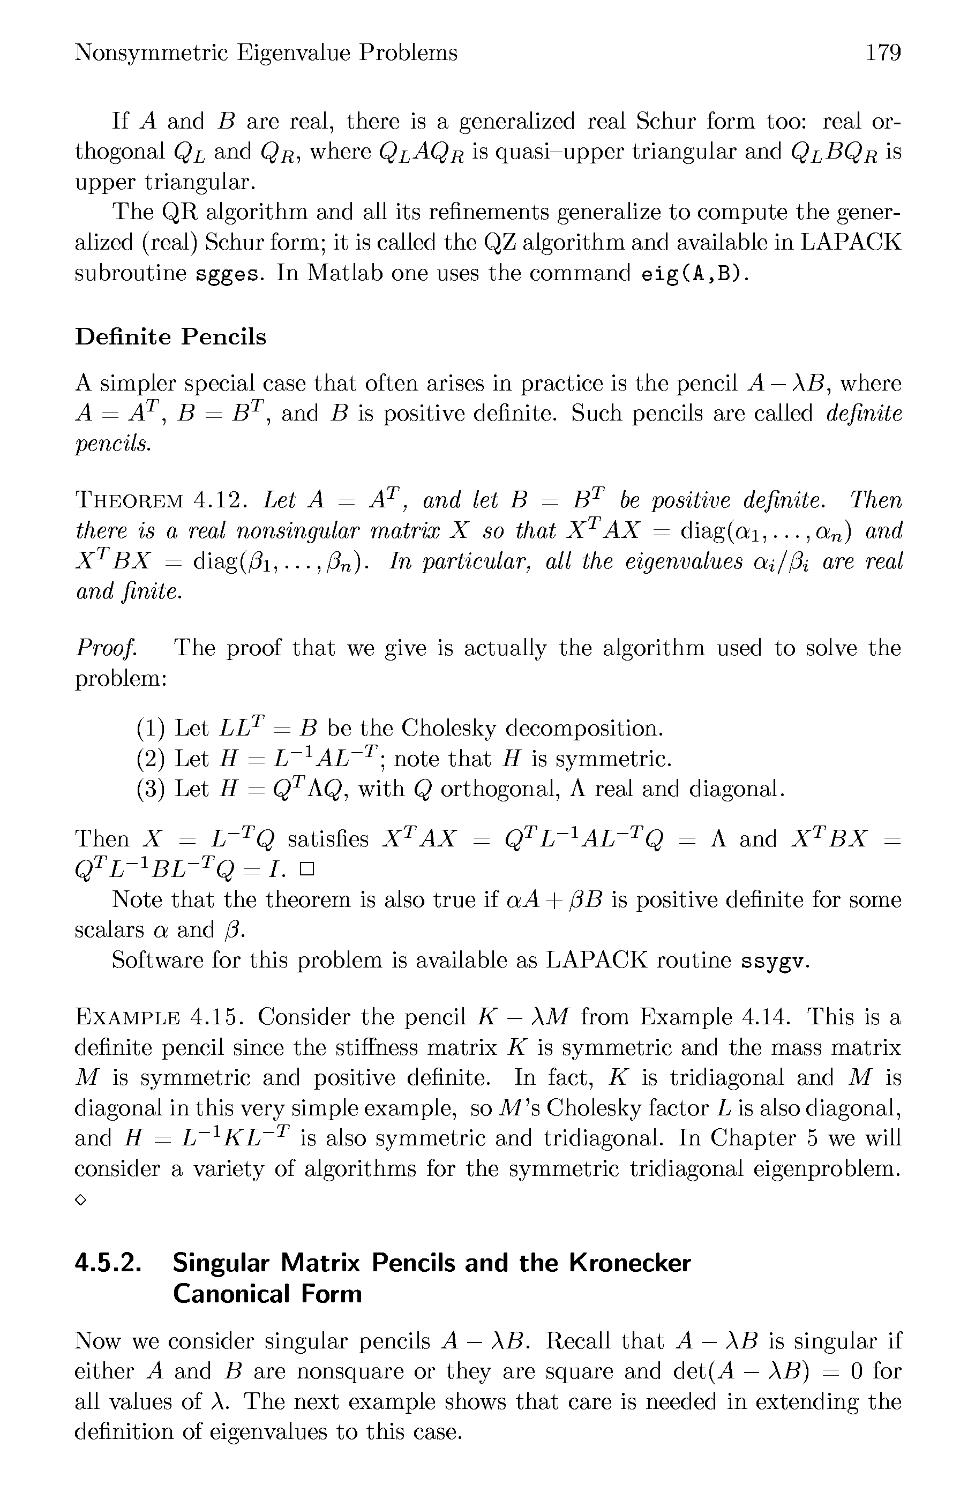 4.5.2 Singular Matrix Pencils and the Kronecker Canonical Form